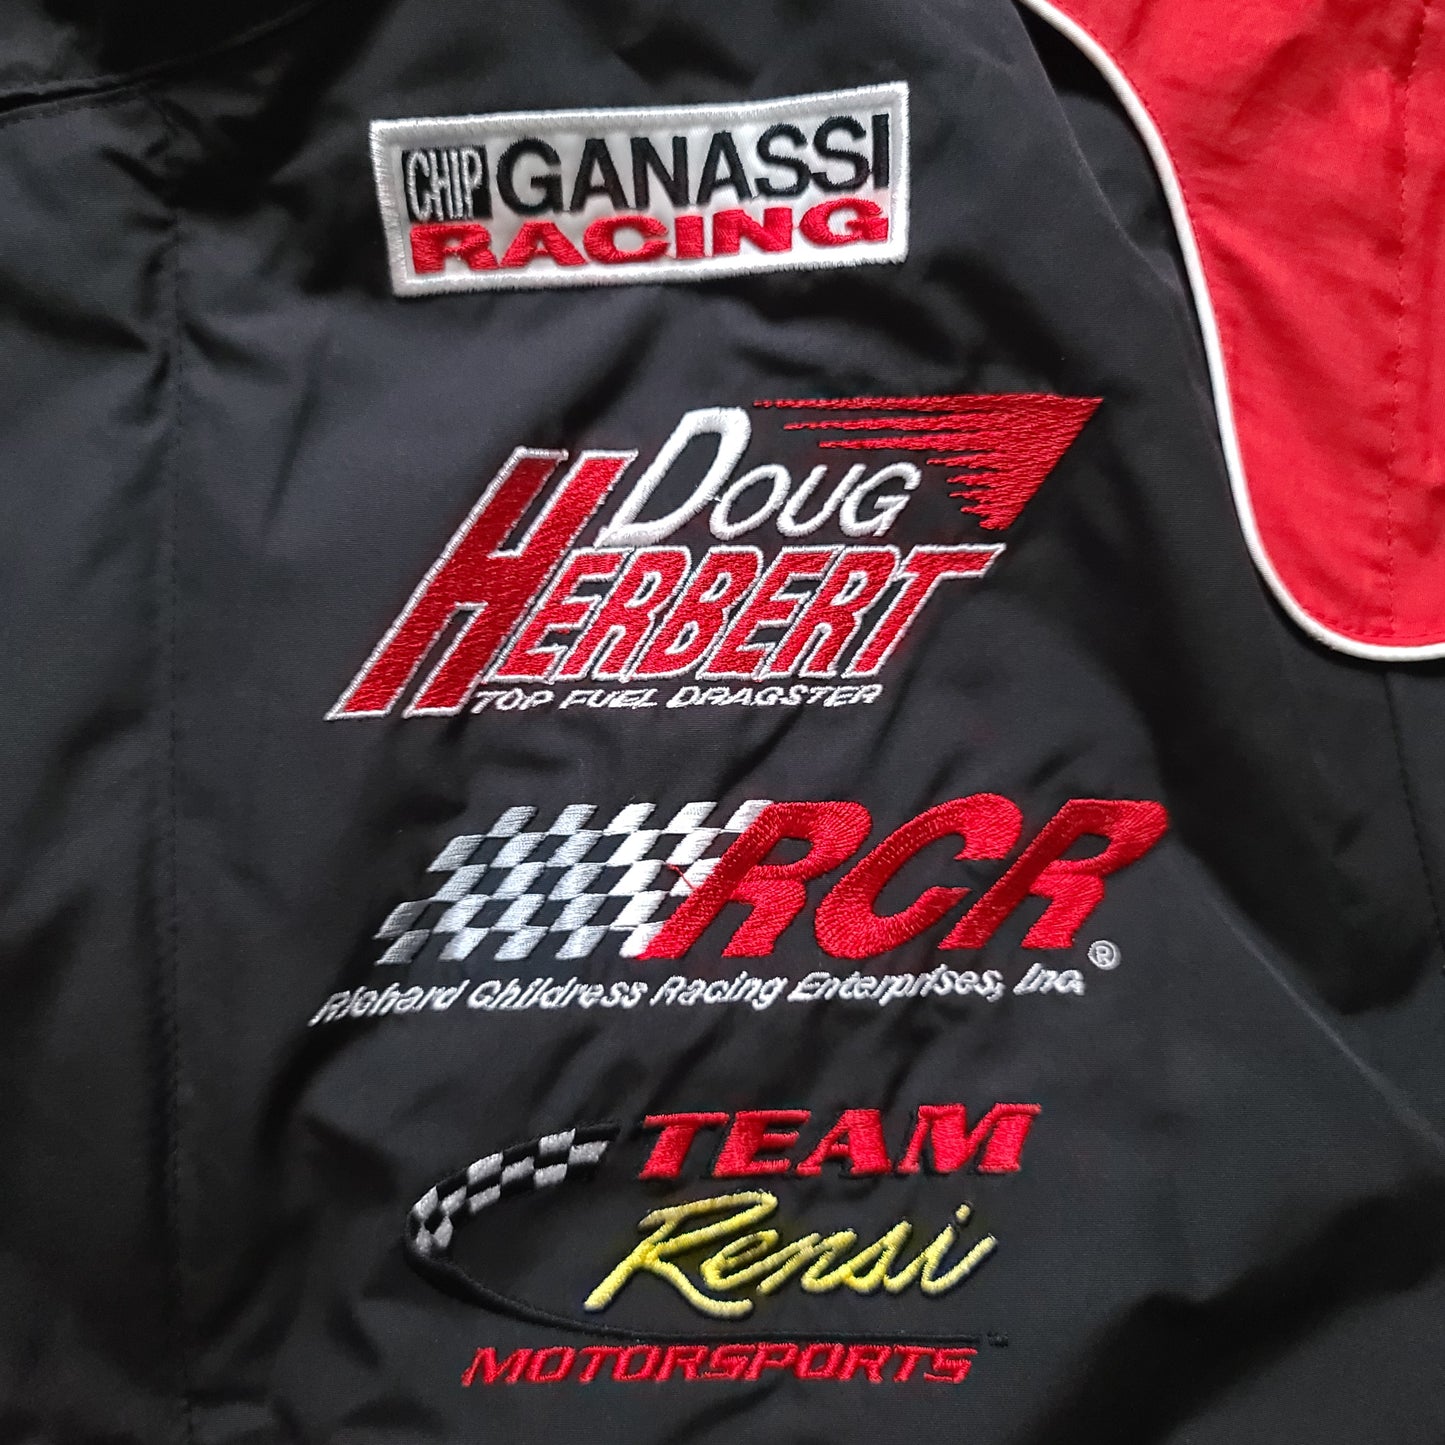 Doug Herbert Snap On Racing Red Black Windbreaker Jacket